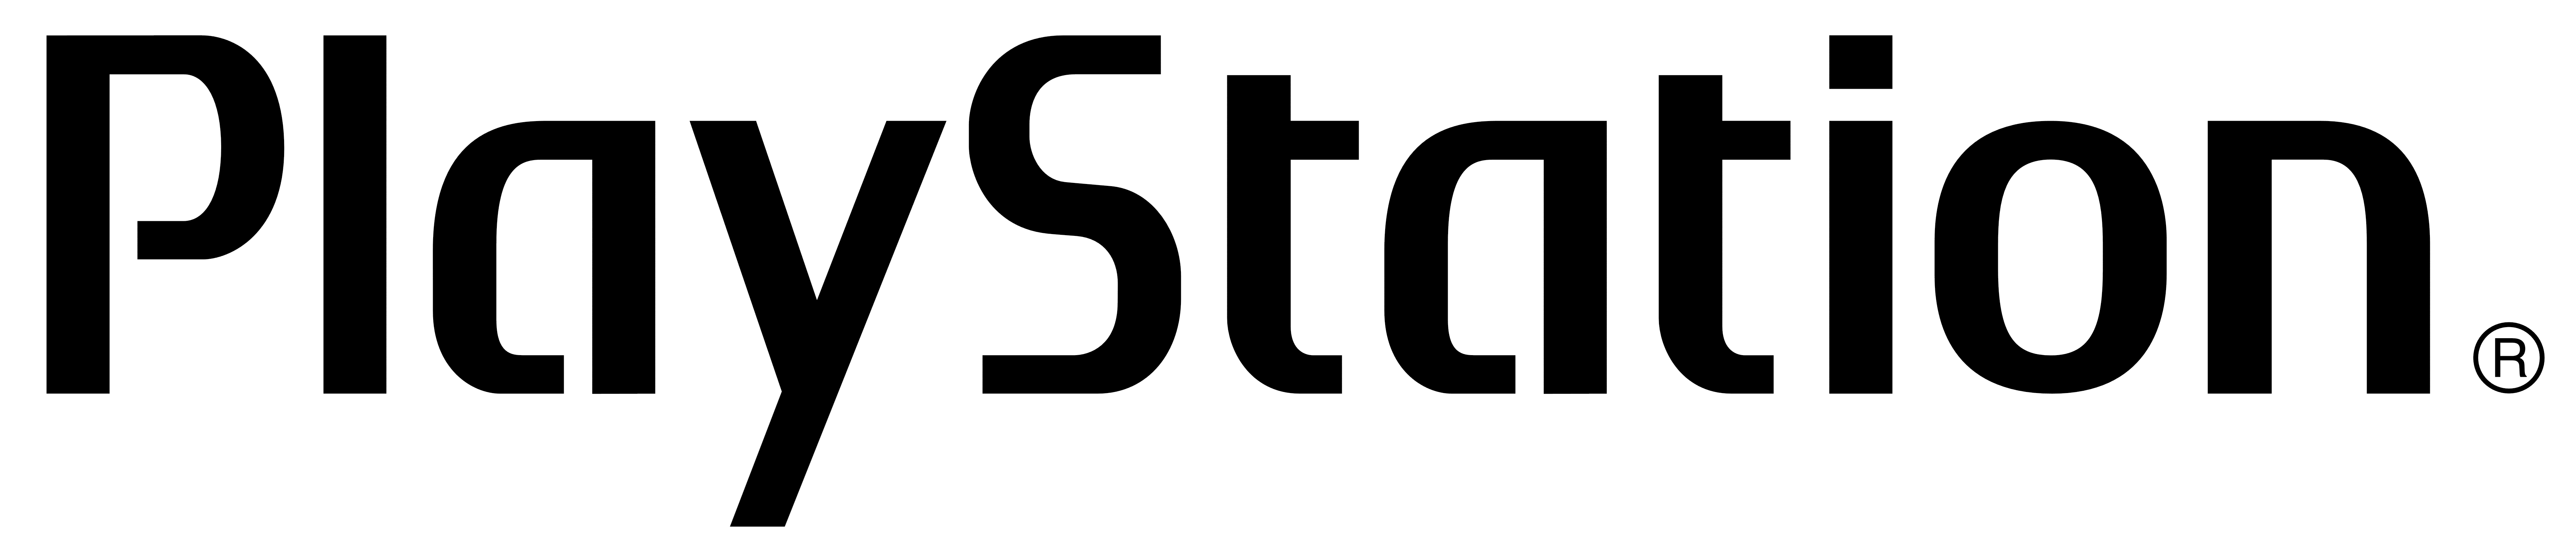 PlayStation logo, logotype